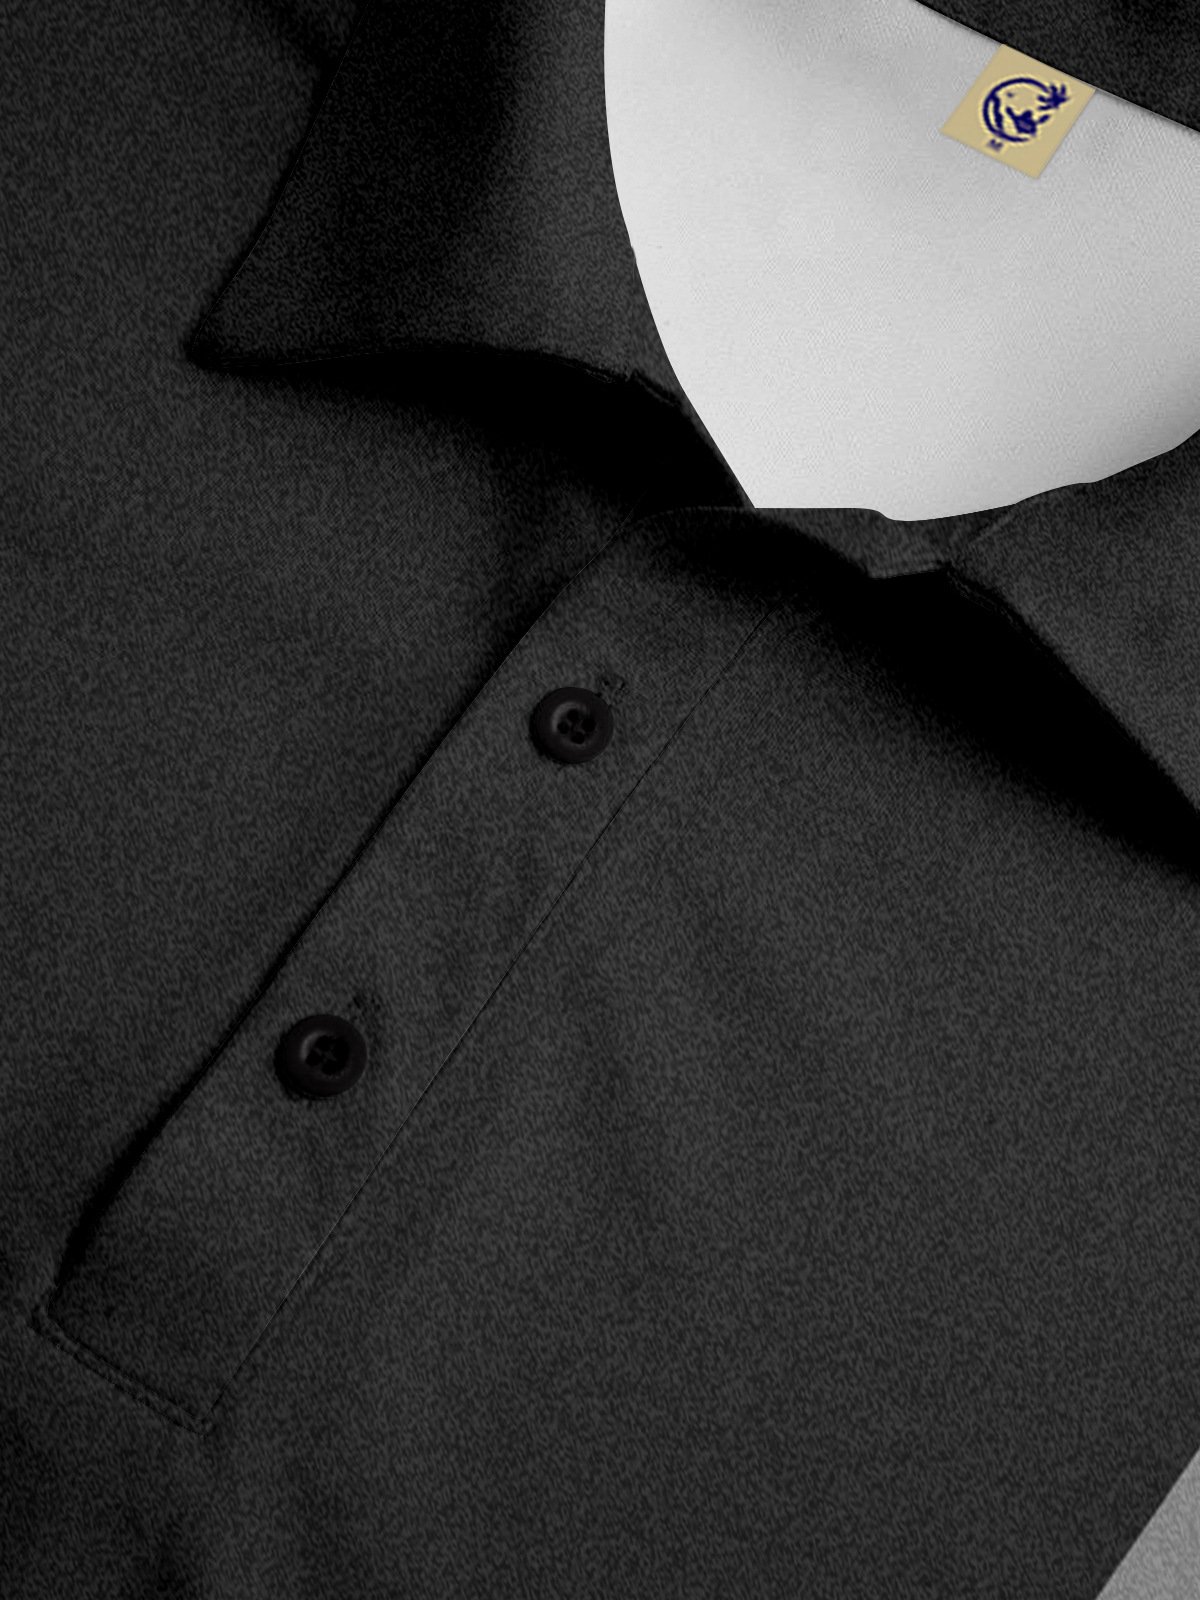 Geometric Button Short Sleeves Casual Bowling Polo Shirt